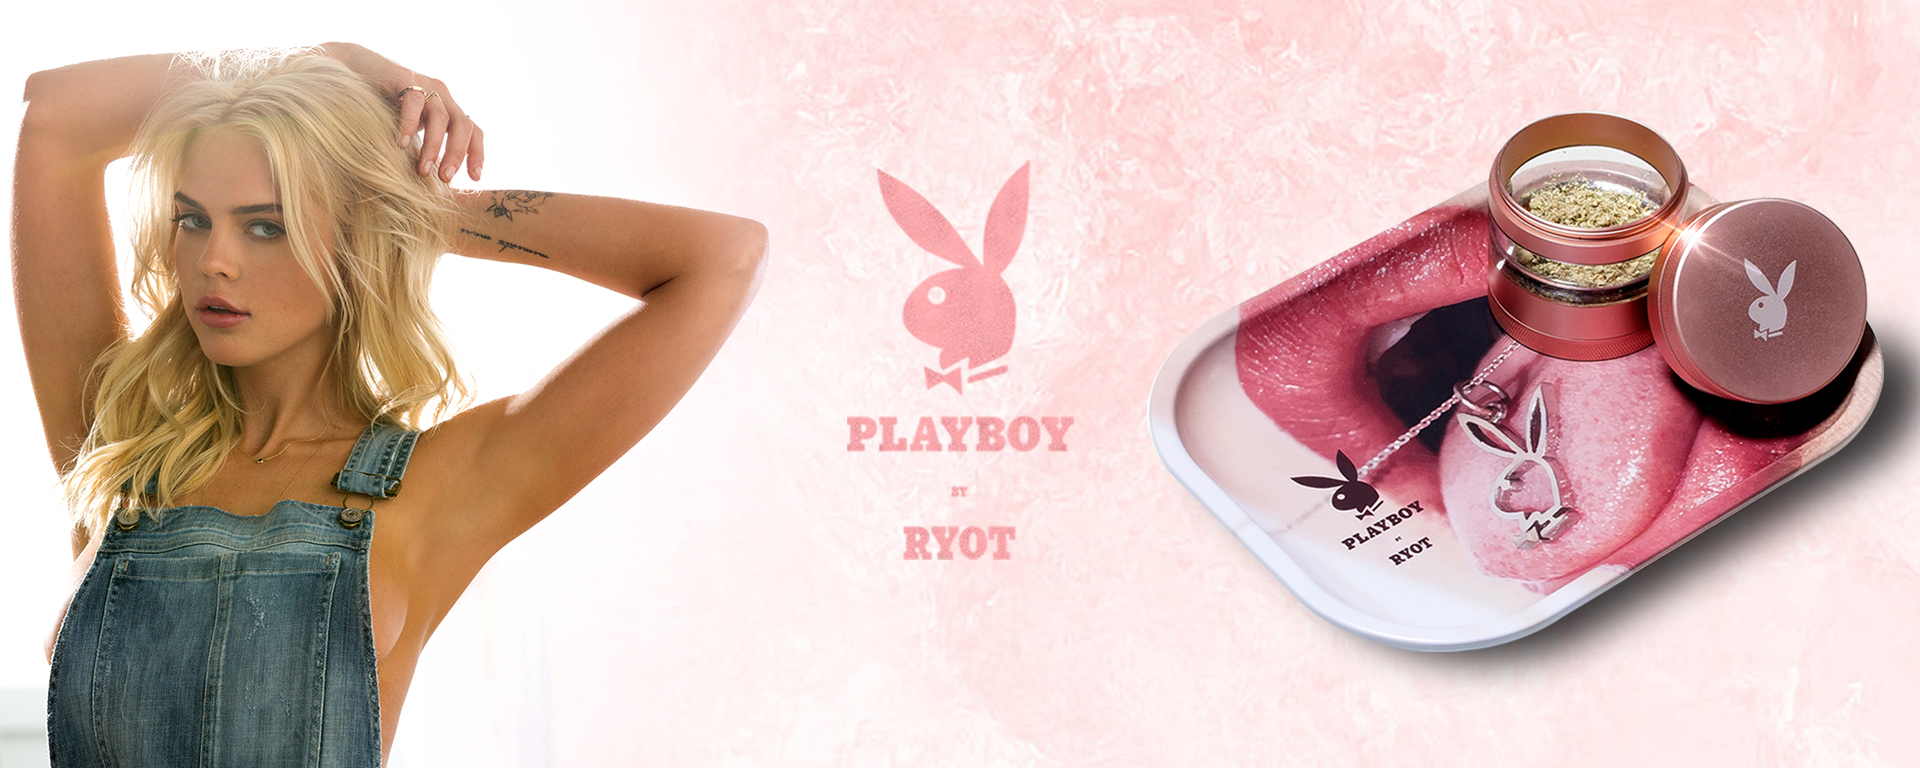 Playboy by Ryot